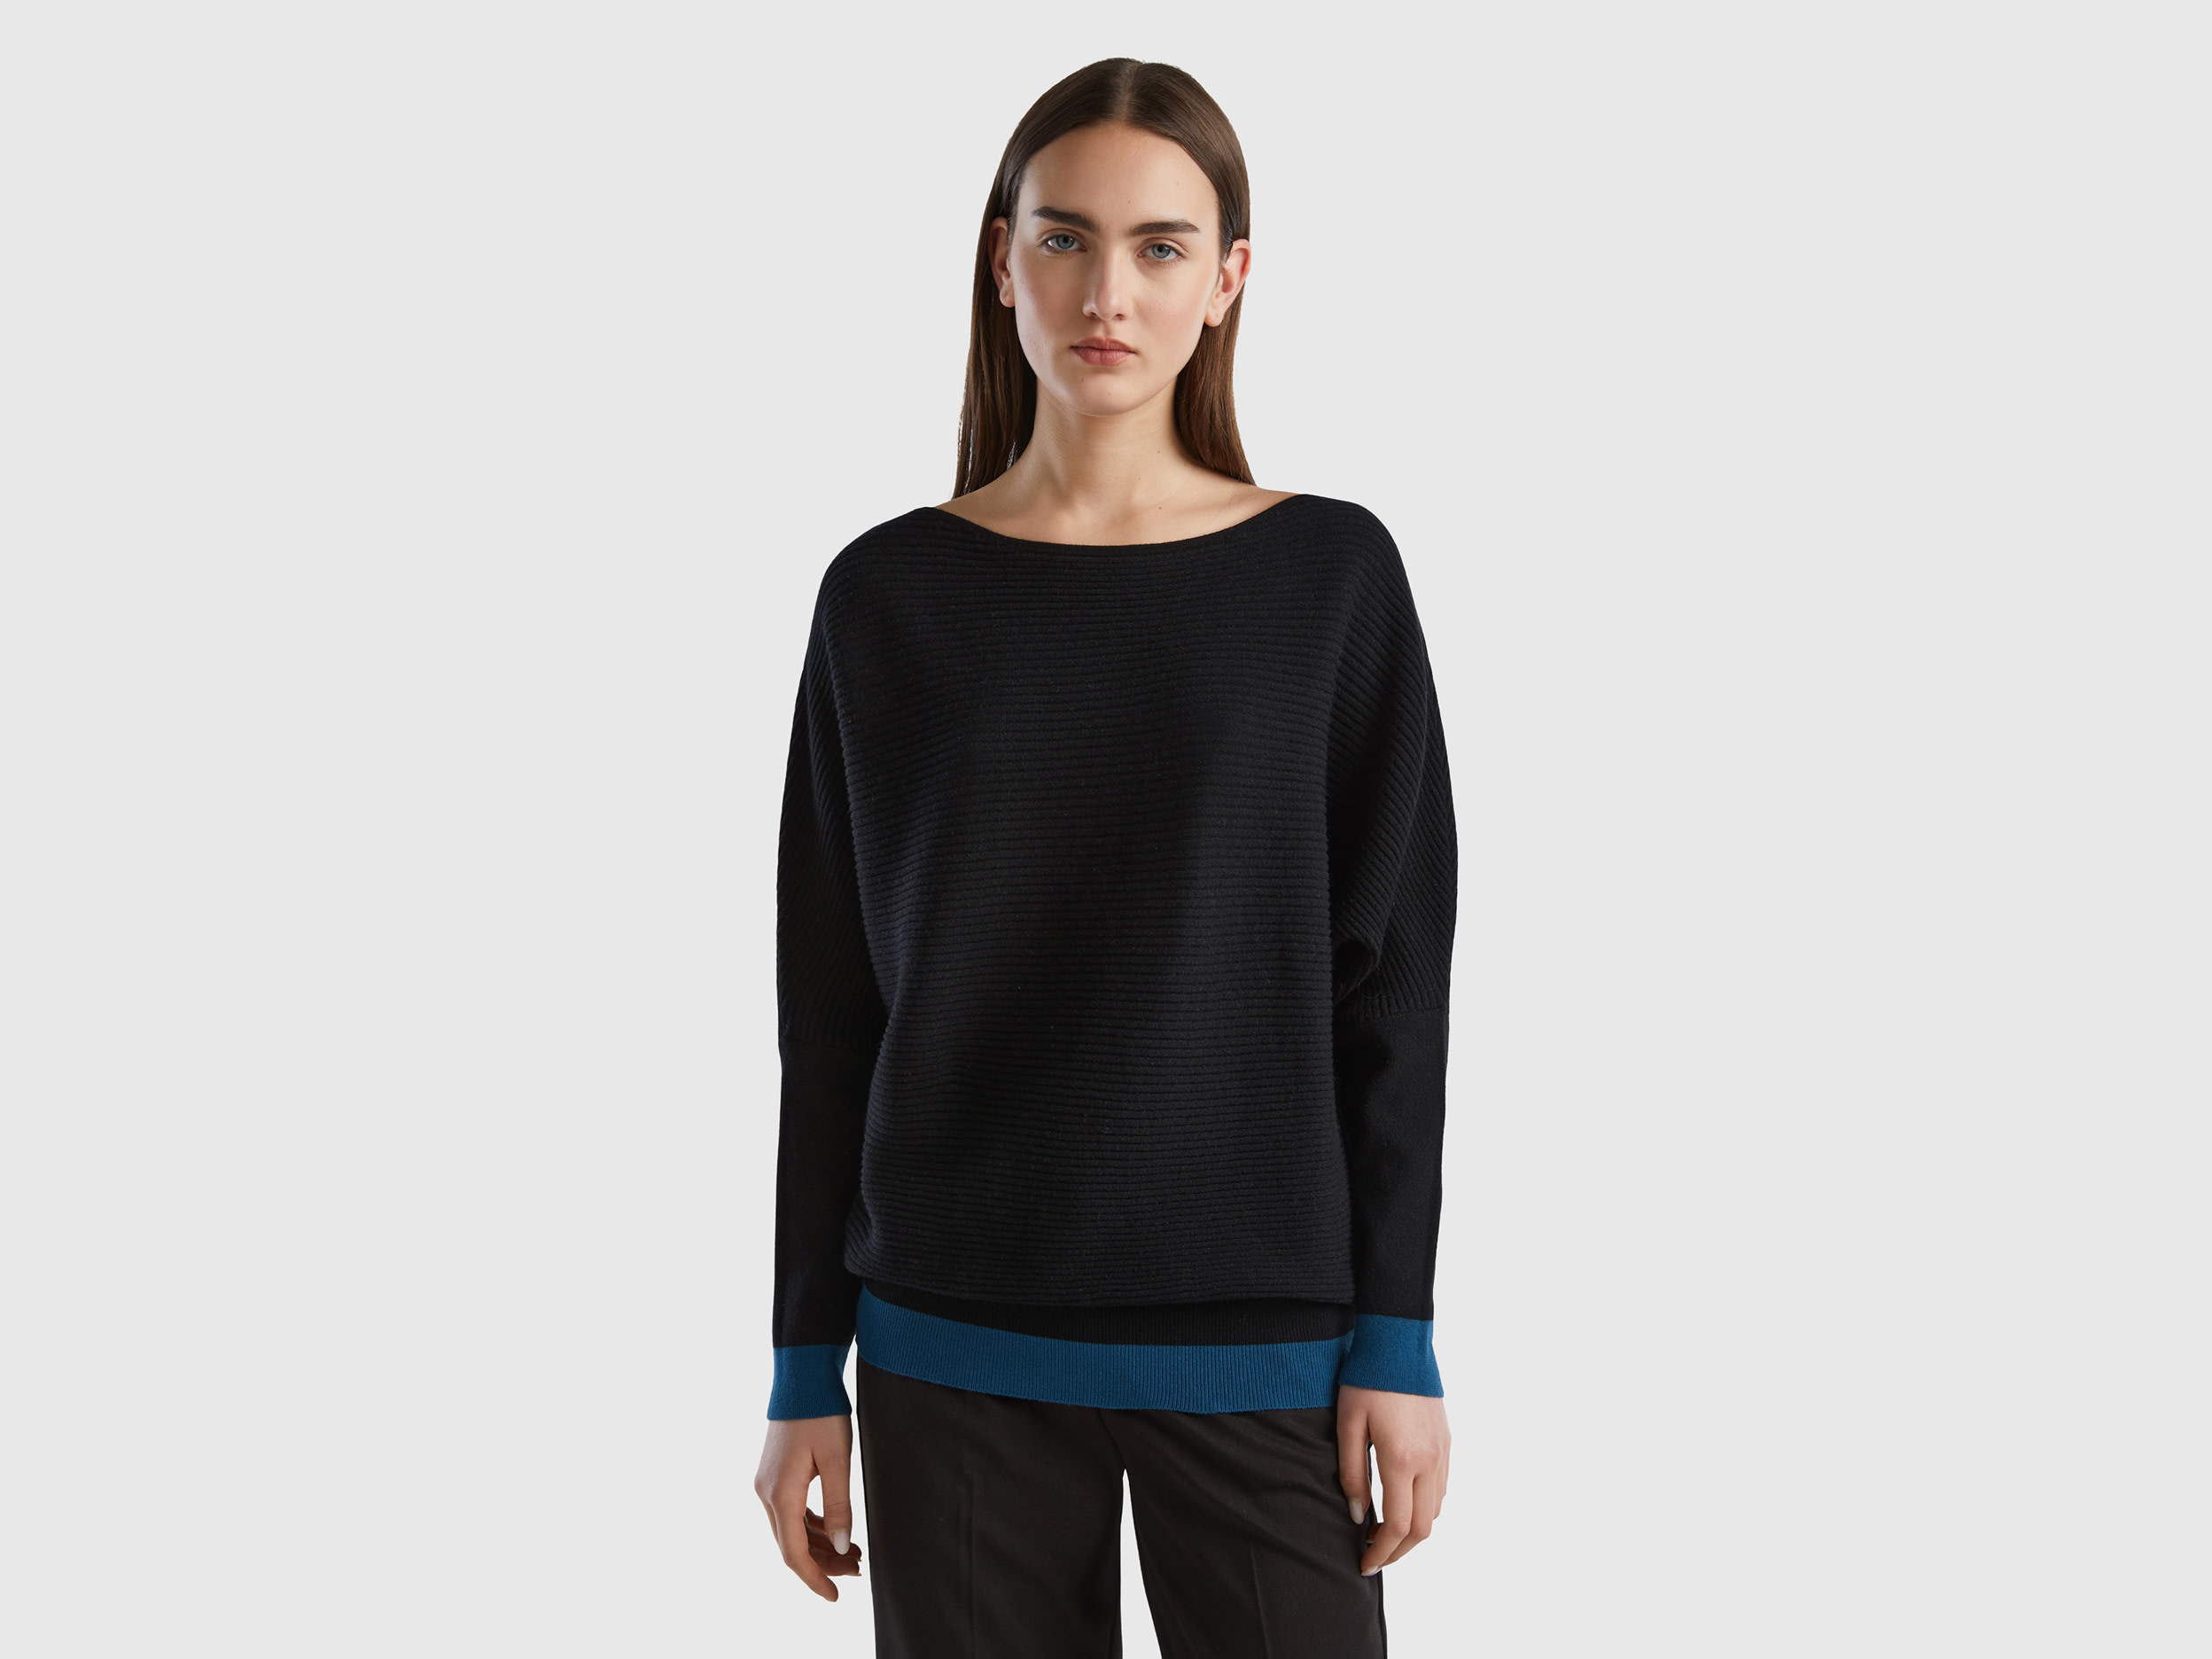 Benetton, Boat Neck Sweater, size M, Black, Women